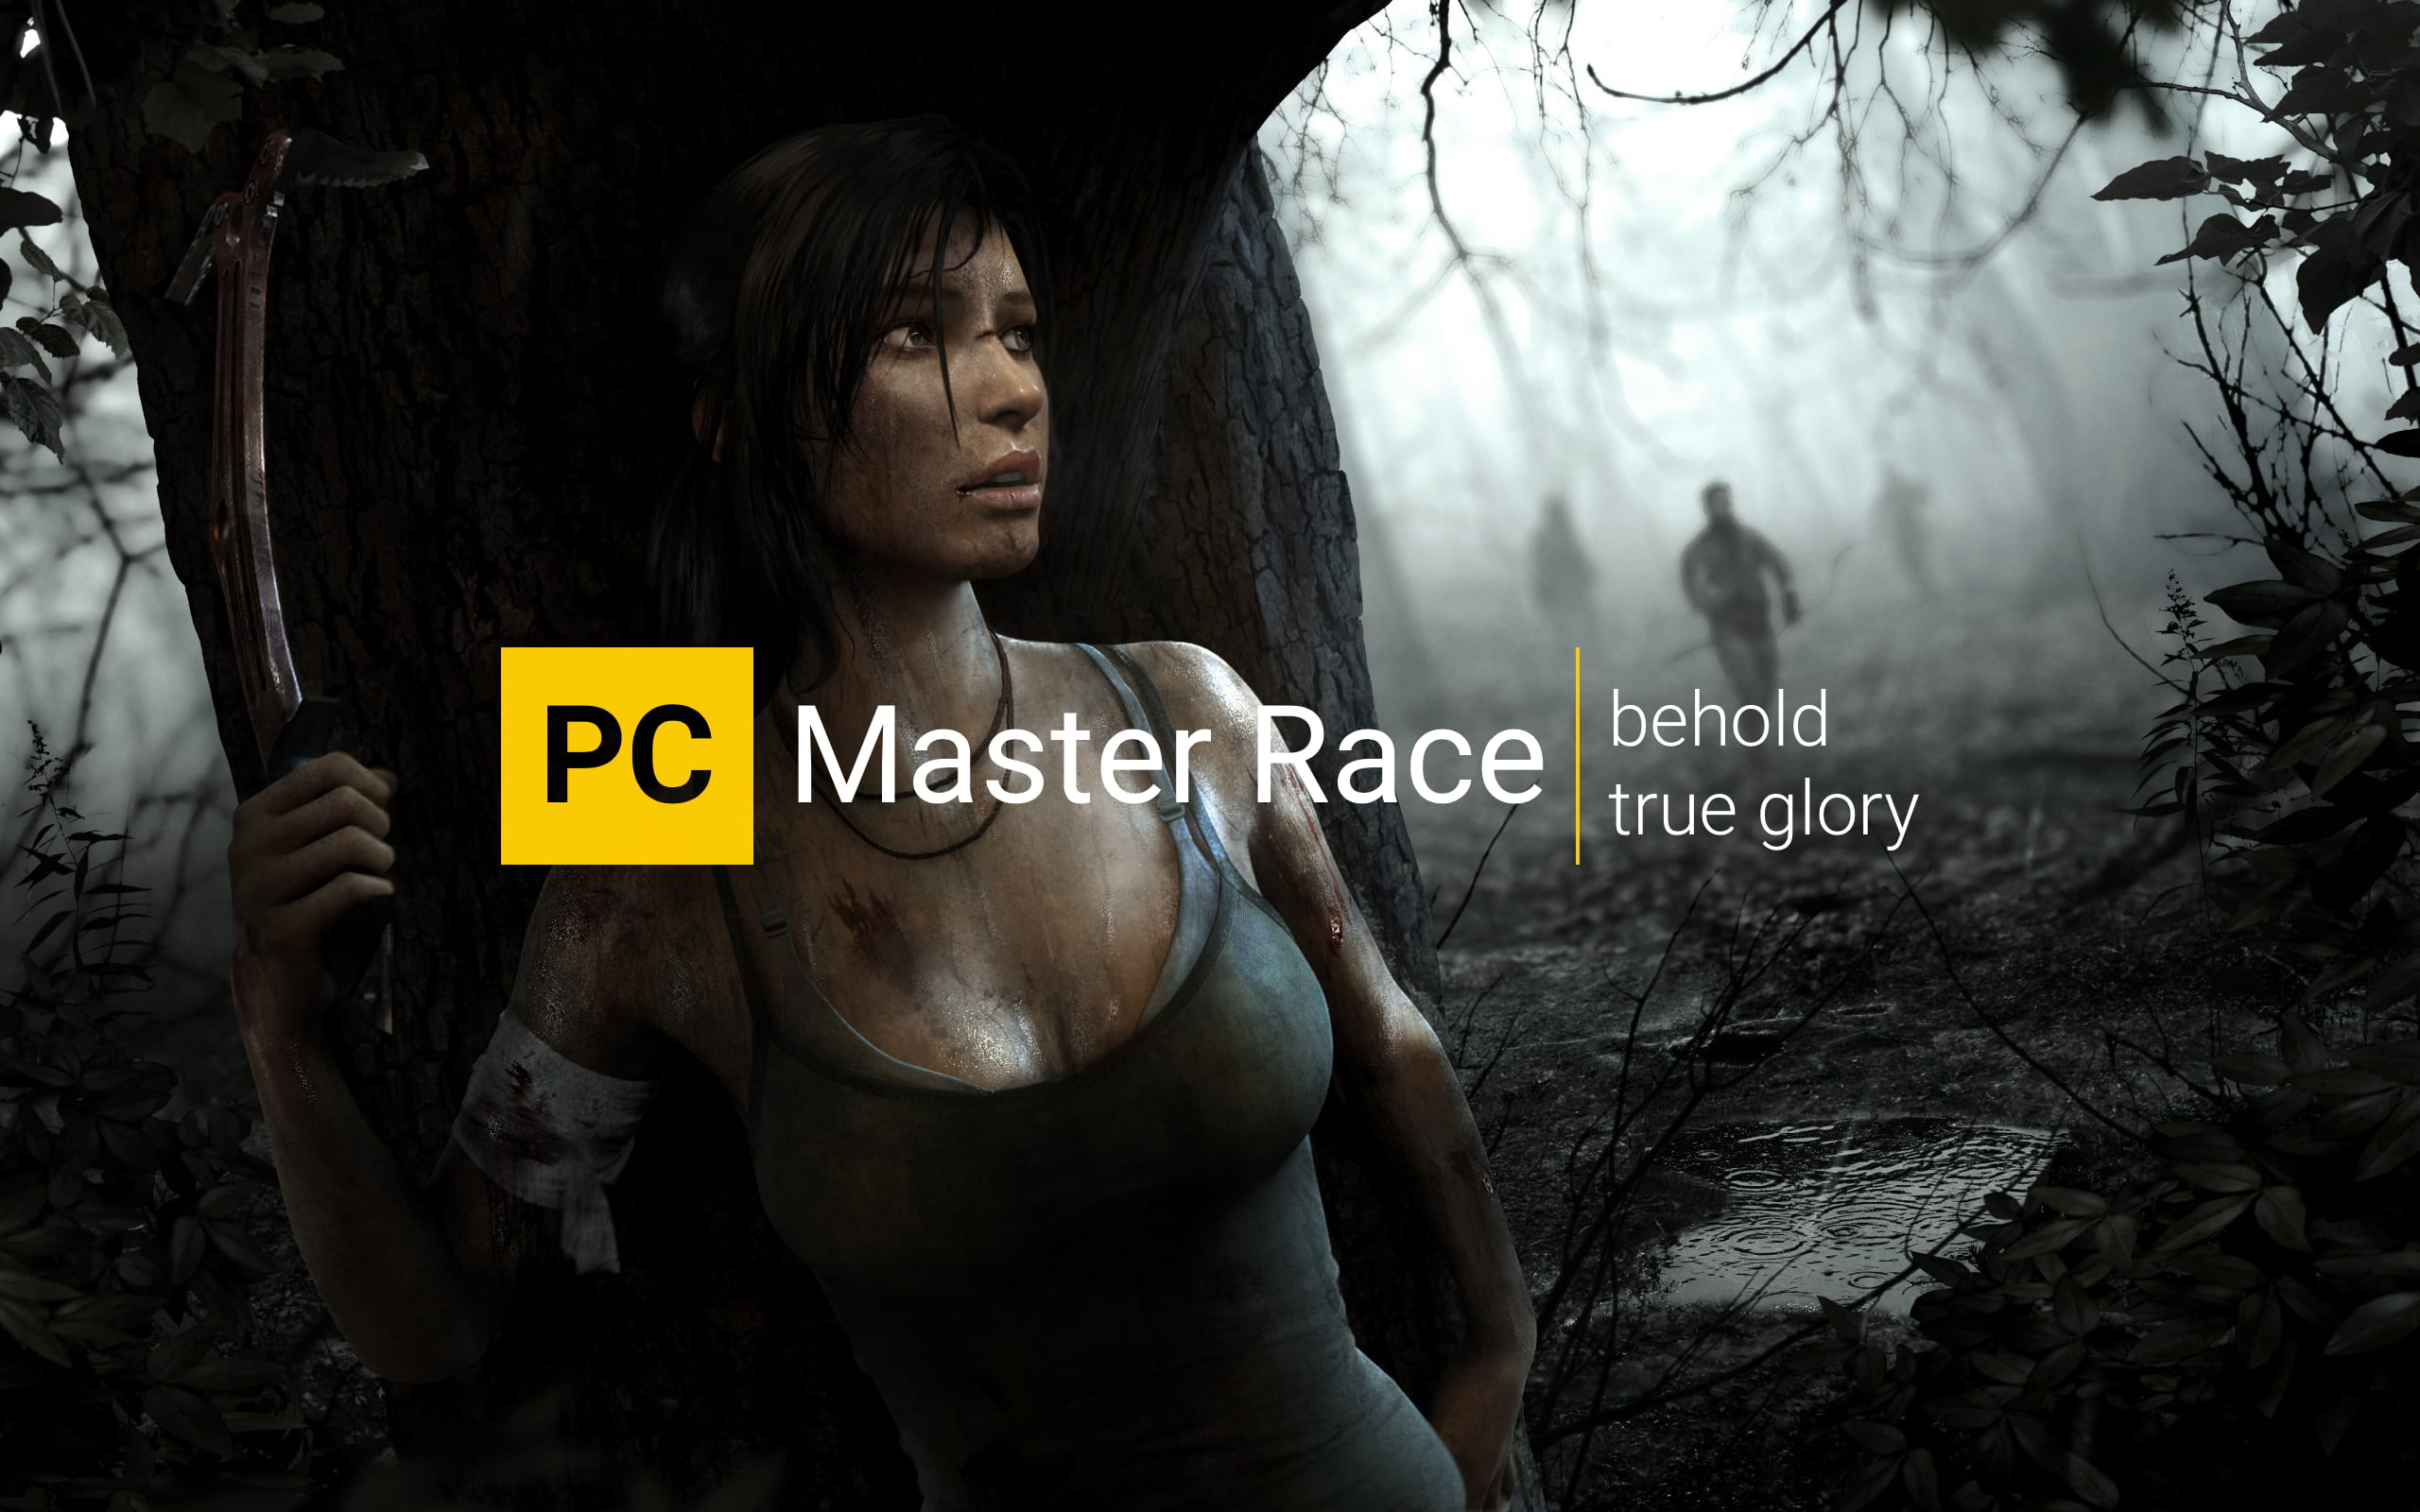 Lara Croft, Tomb Raider, PC Master  Race, PC gaming